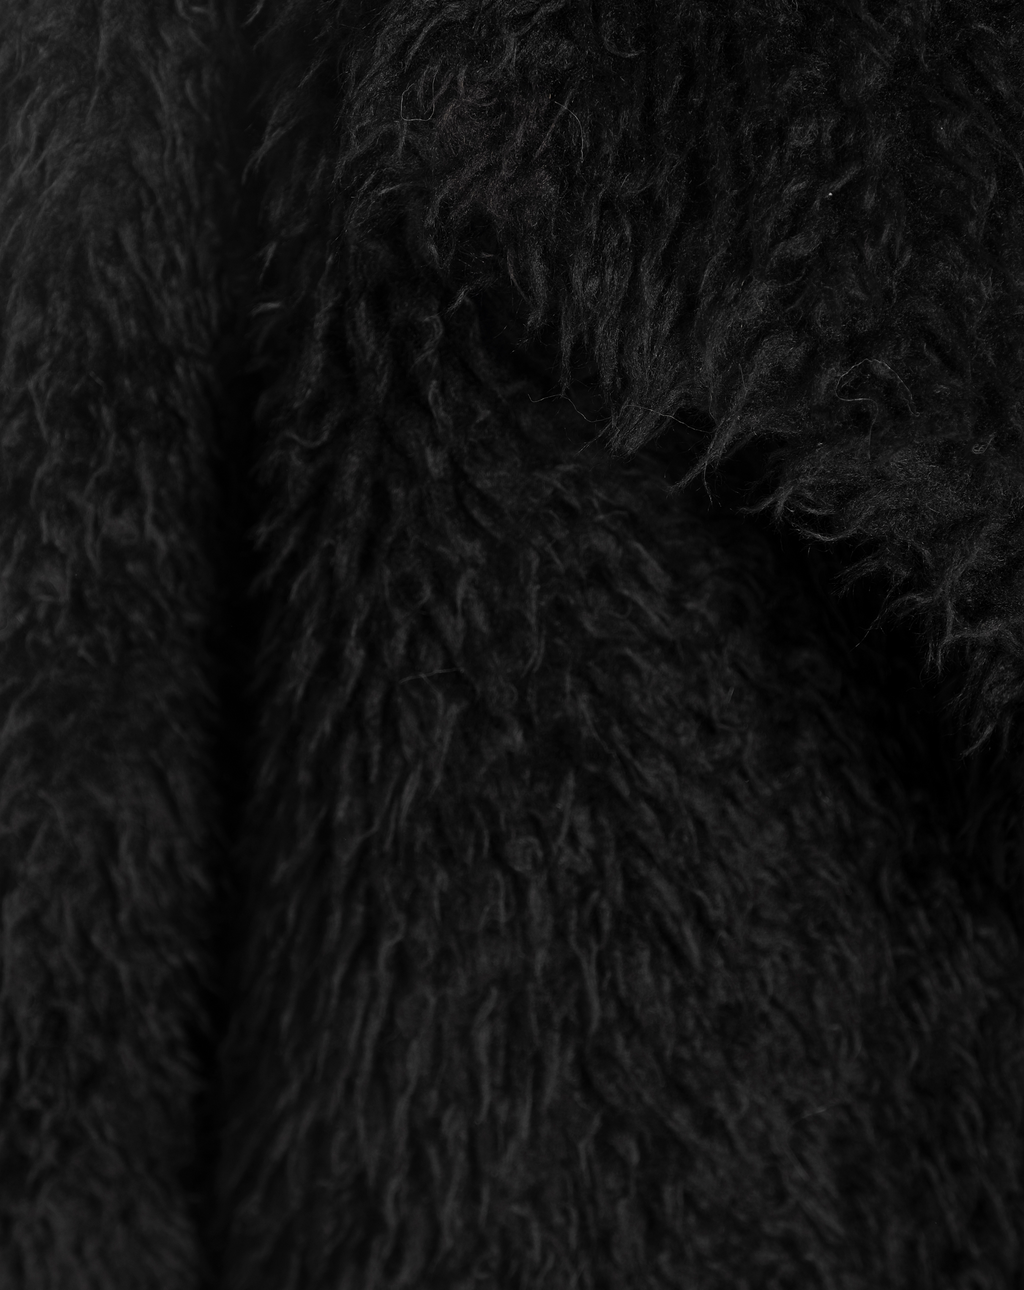 CURLY POP - Cappotto in faux fur black